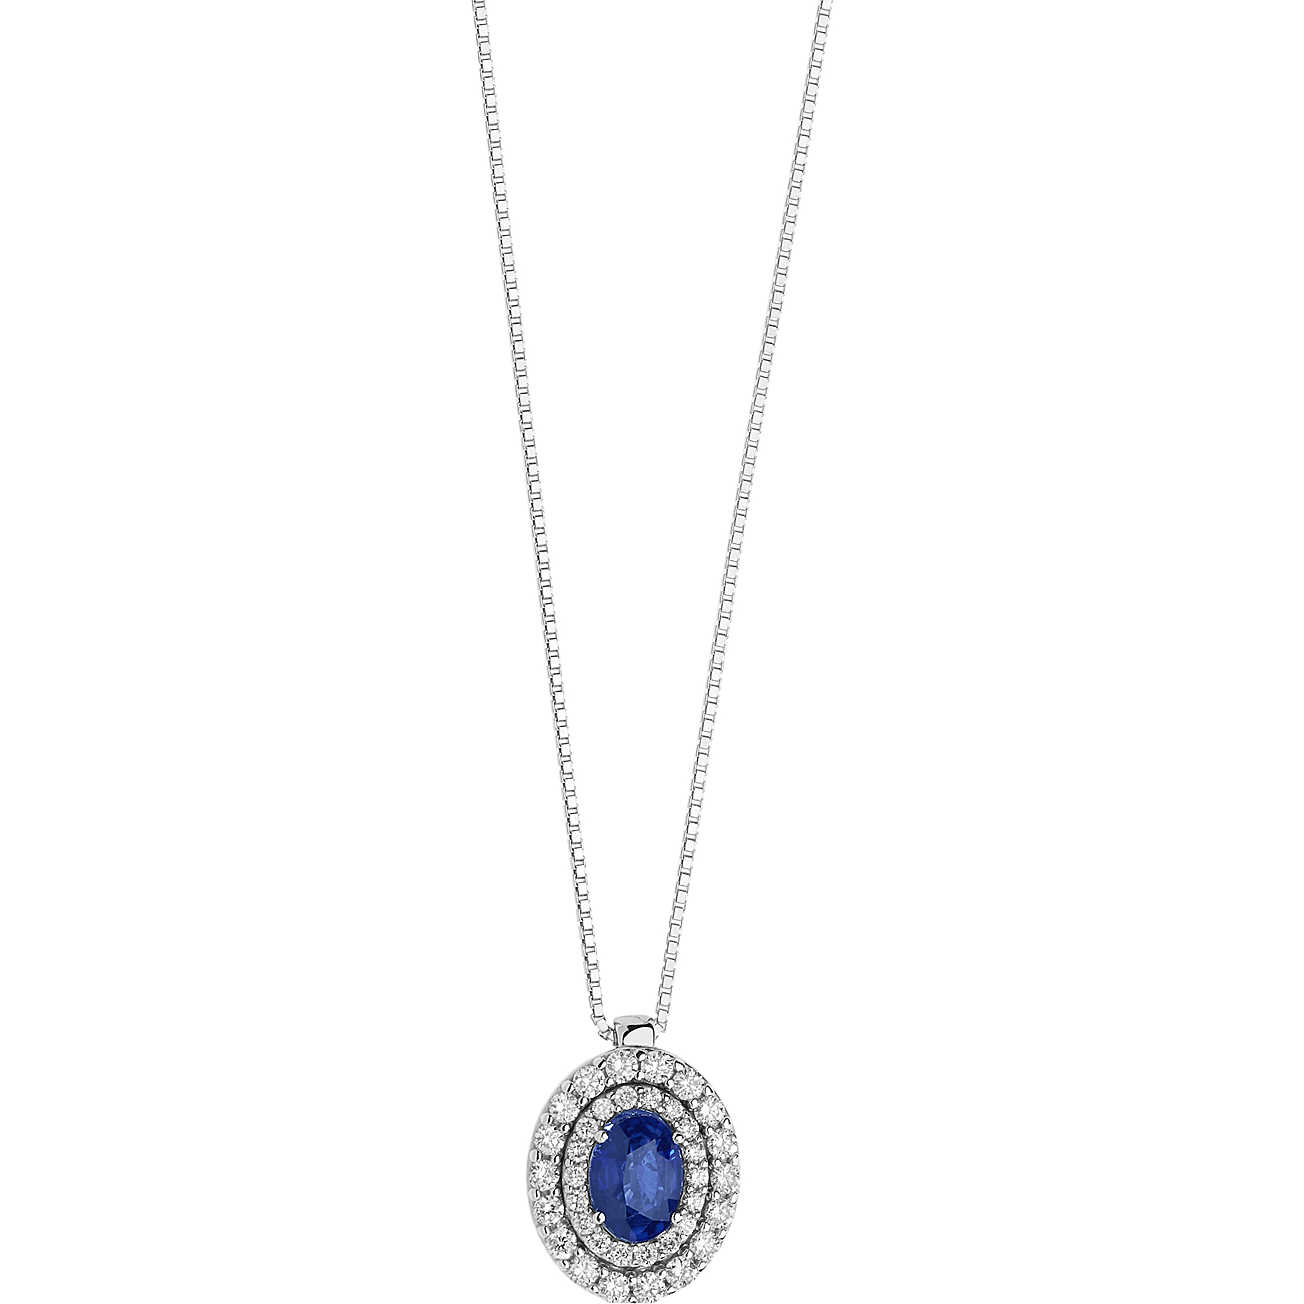 Orion GLB 1474 Women's Jewelry Necklace